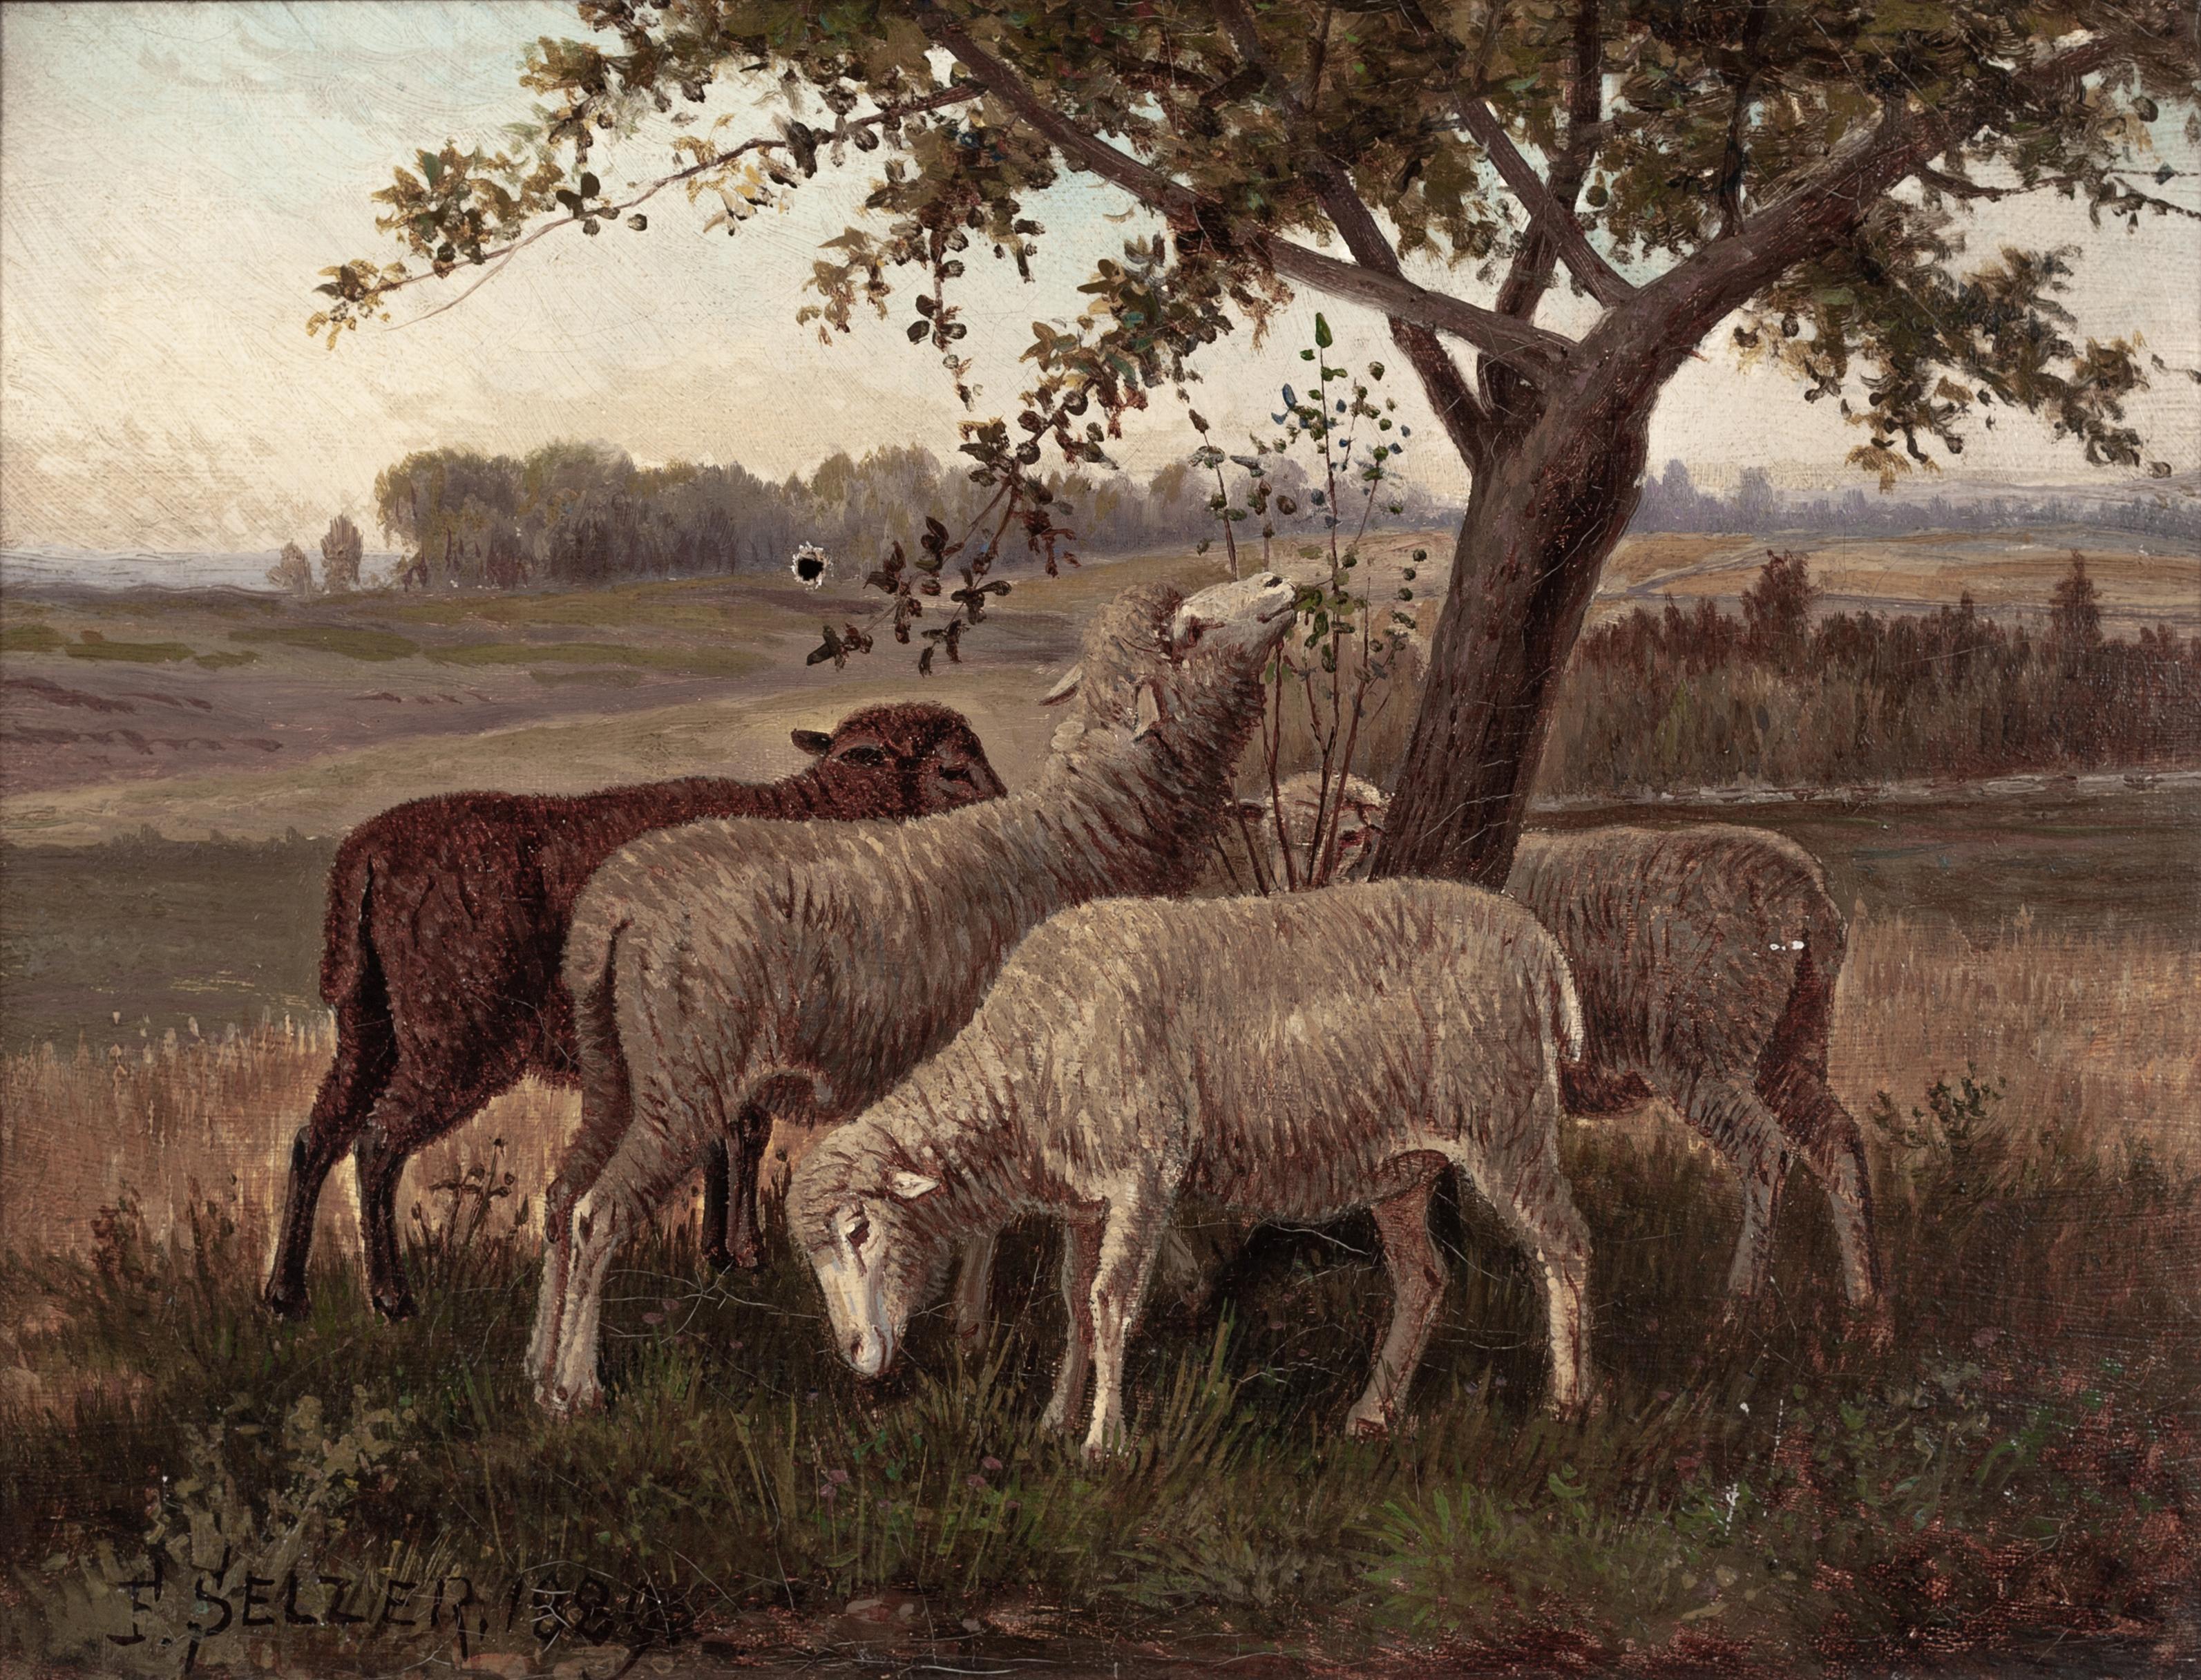 Frank Selzer Landscape Painting - Sheep Under Tree